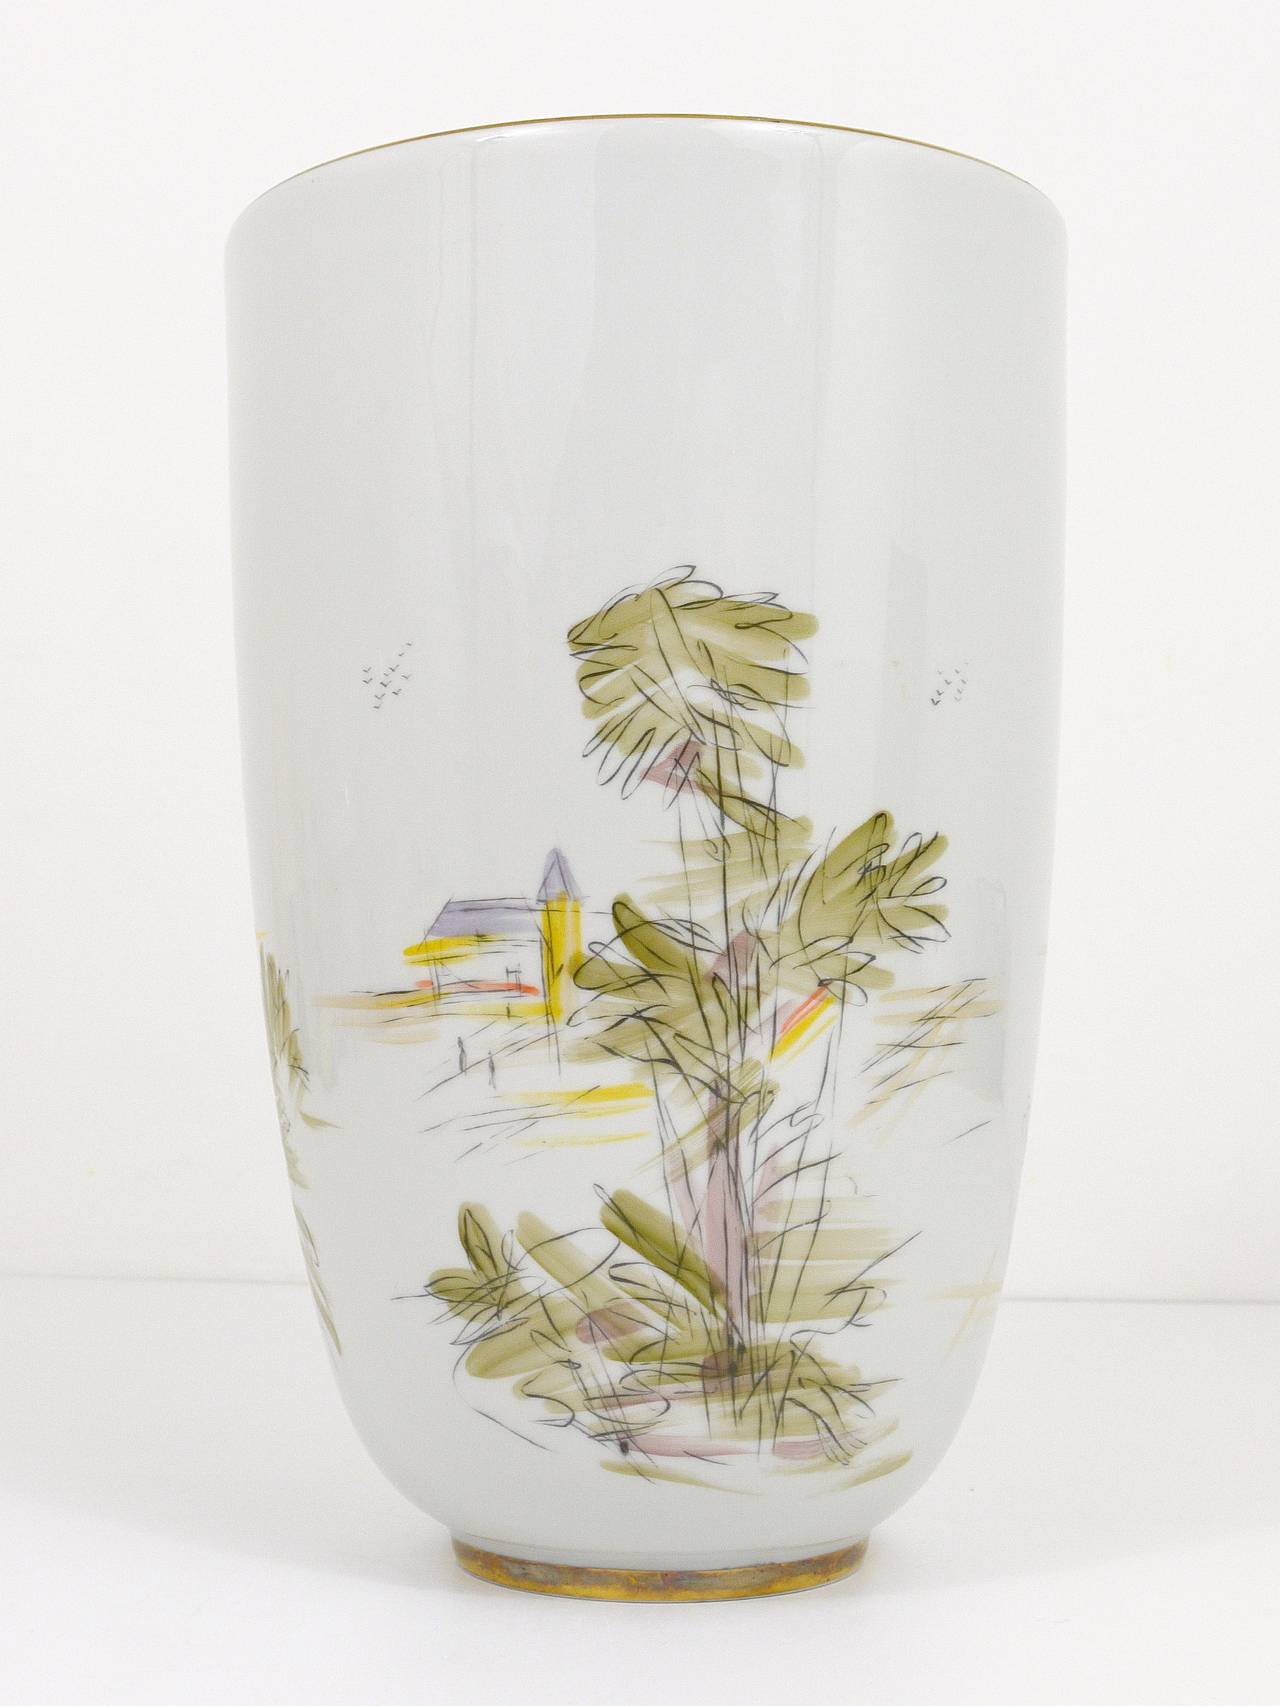 Huge Hutschenreuther Handpainted Midcentury Porcelain Vase, Selb, Germany, 1950s For Sale 3